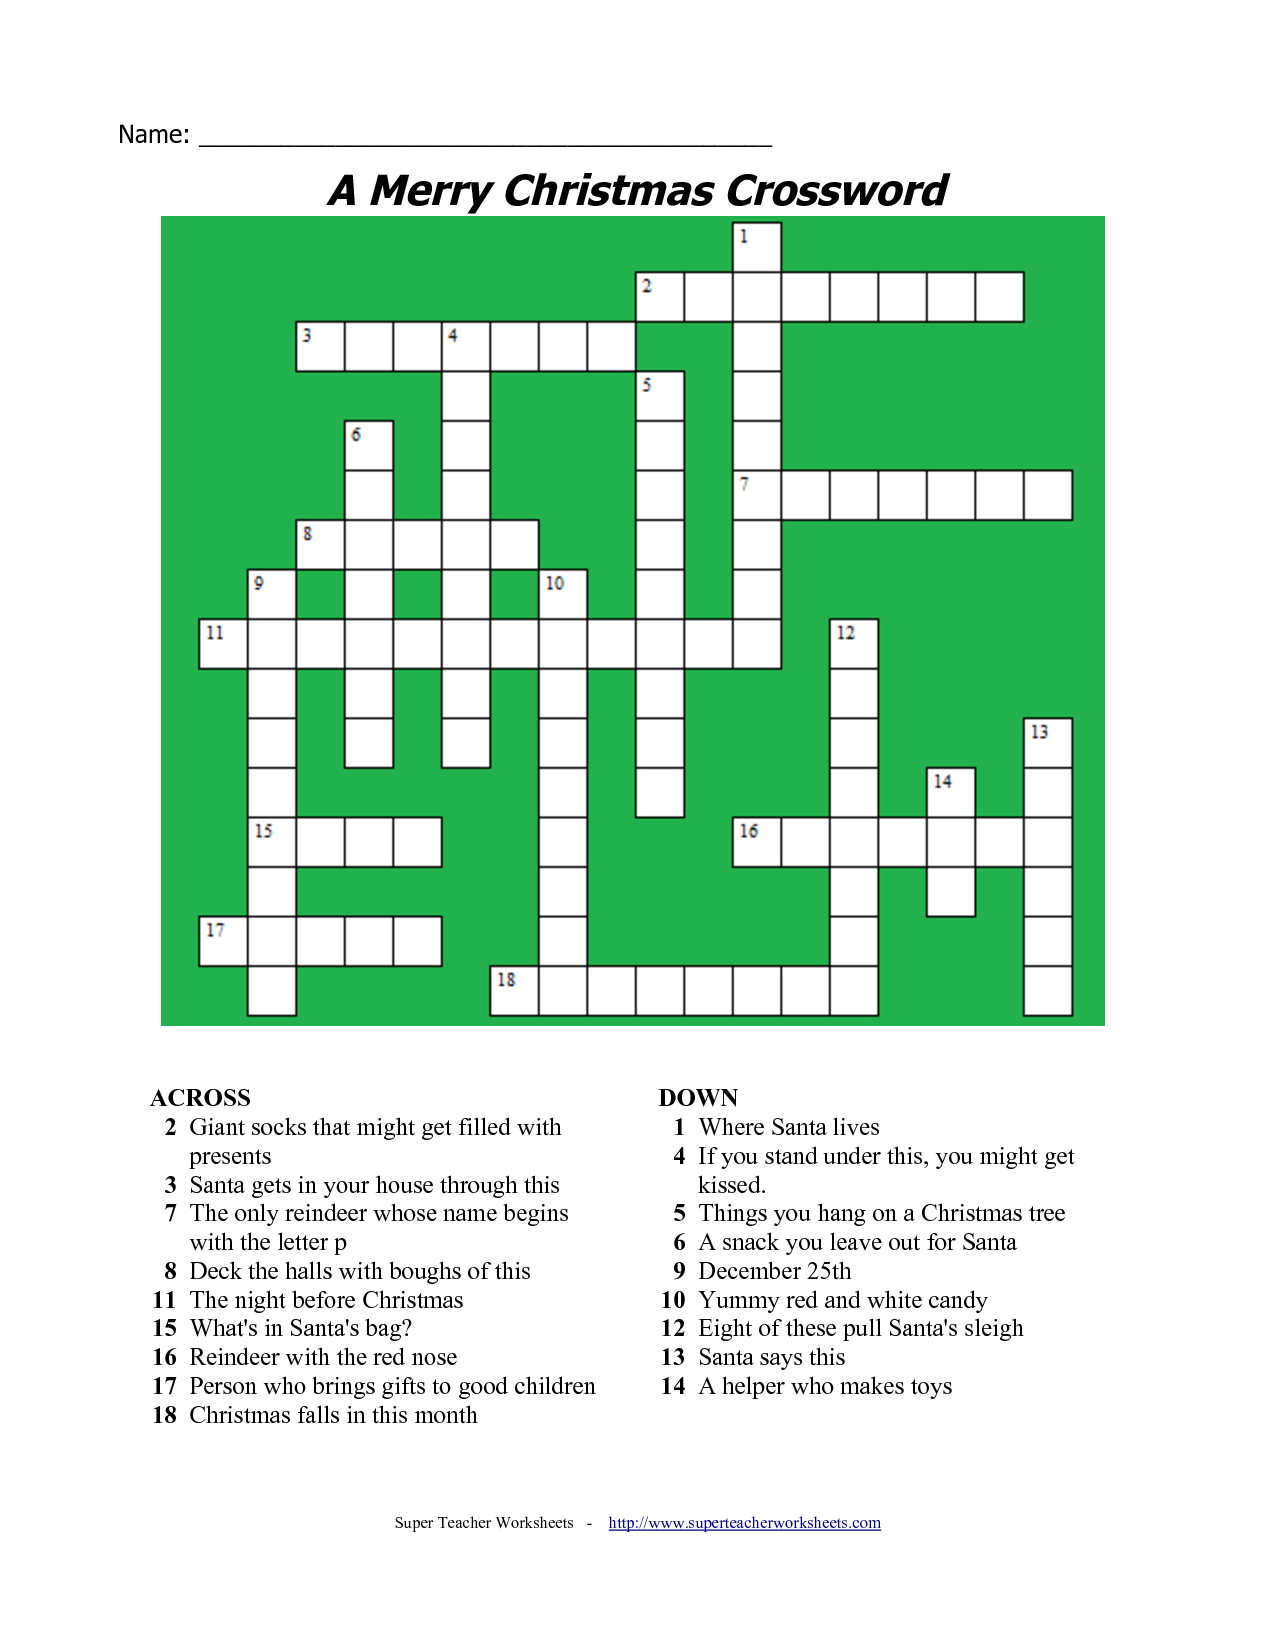 20 Fun Printable Christmas Crossword Puzzles | Kittybabylove - Holiday Crossword Puzzles Printable